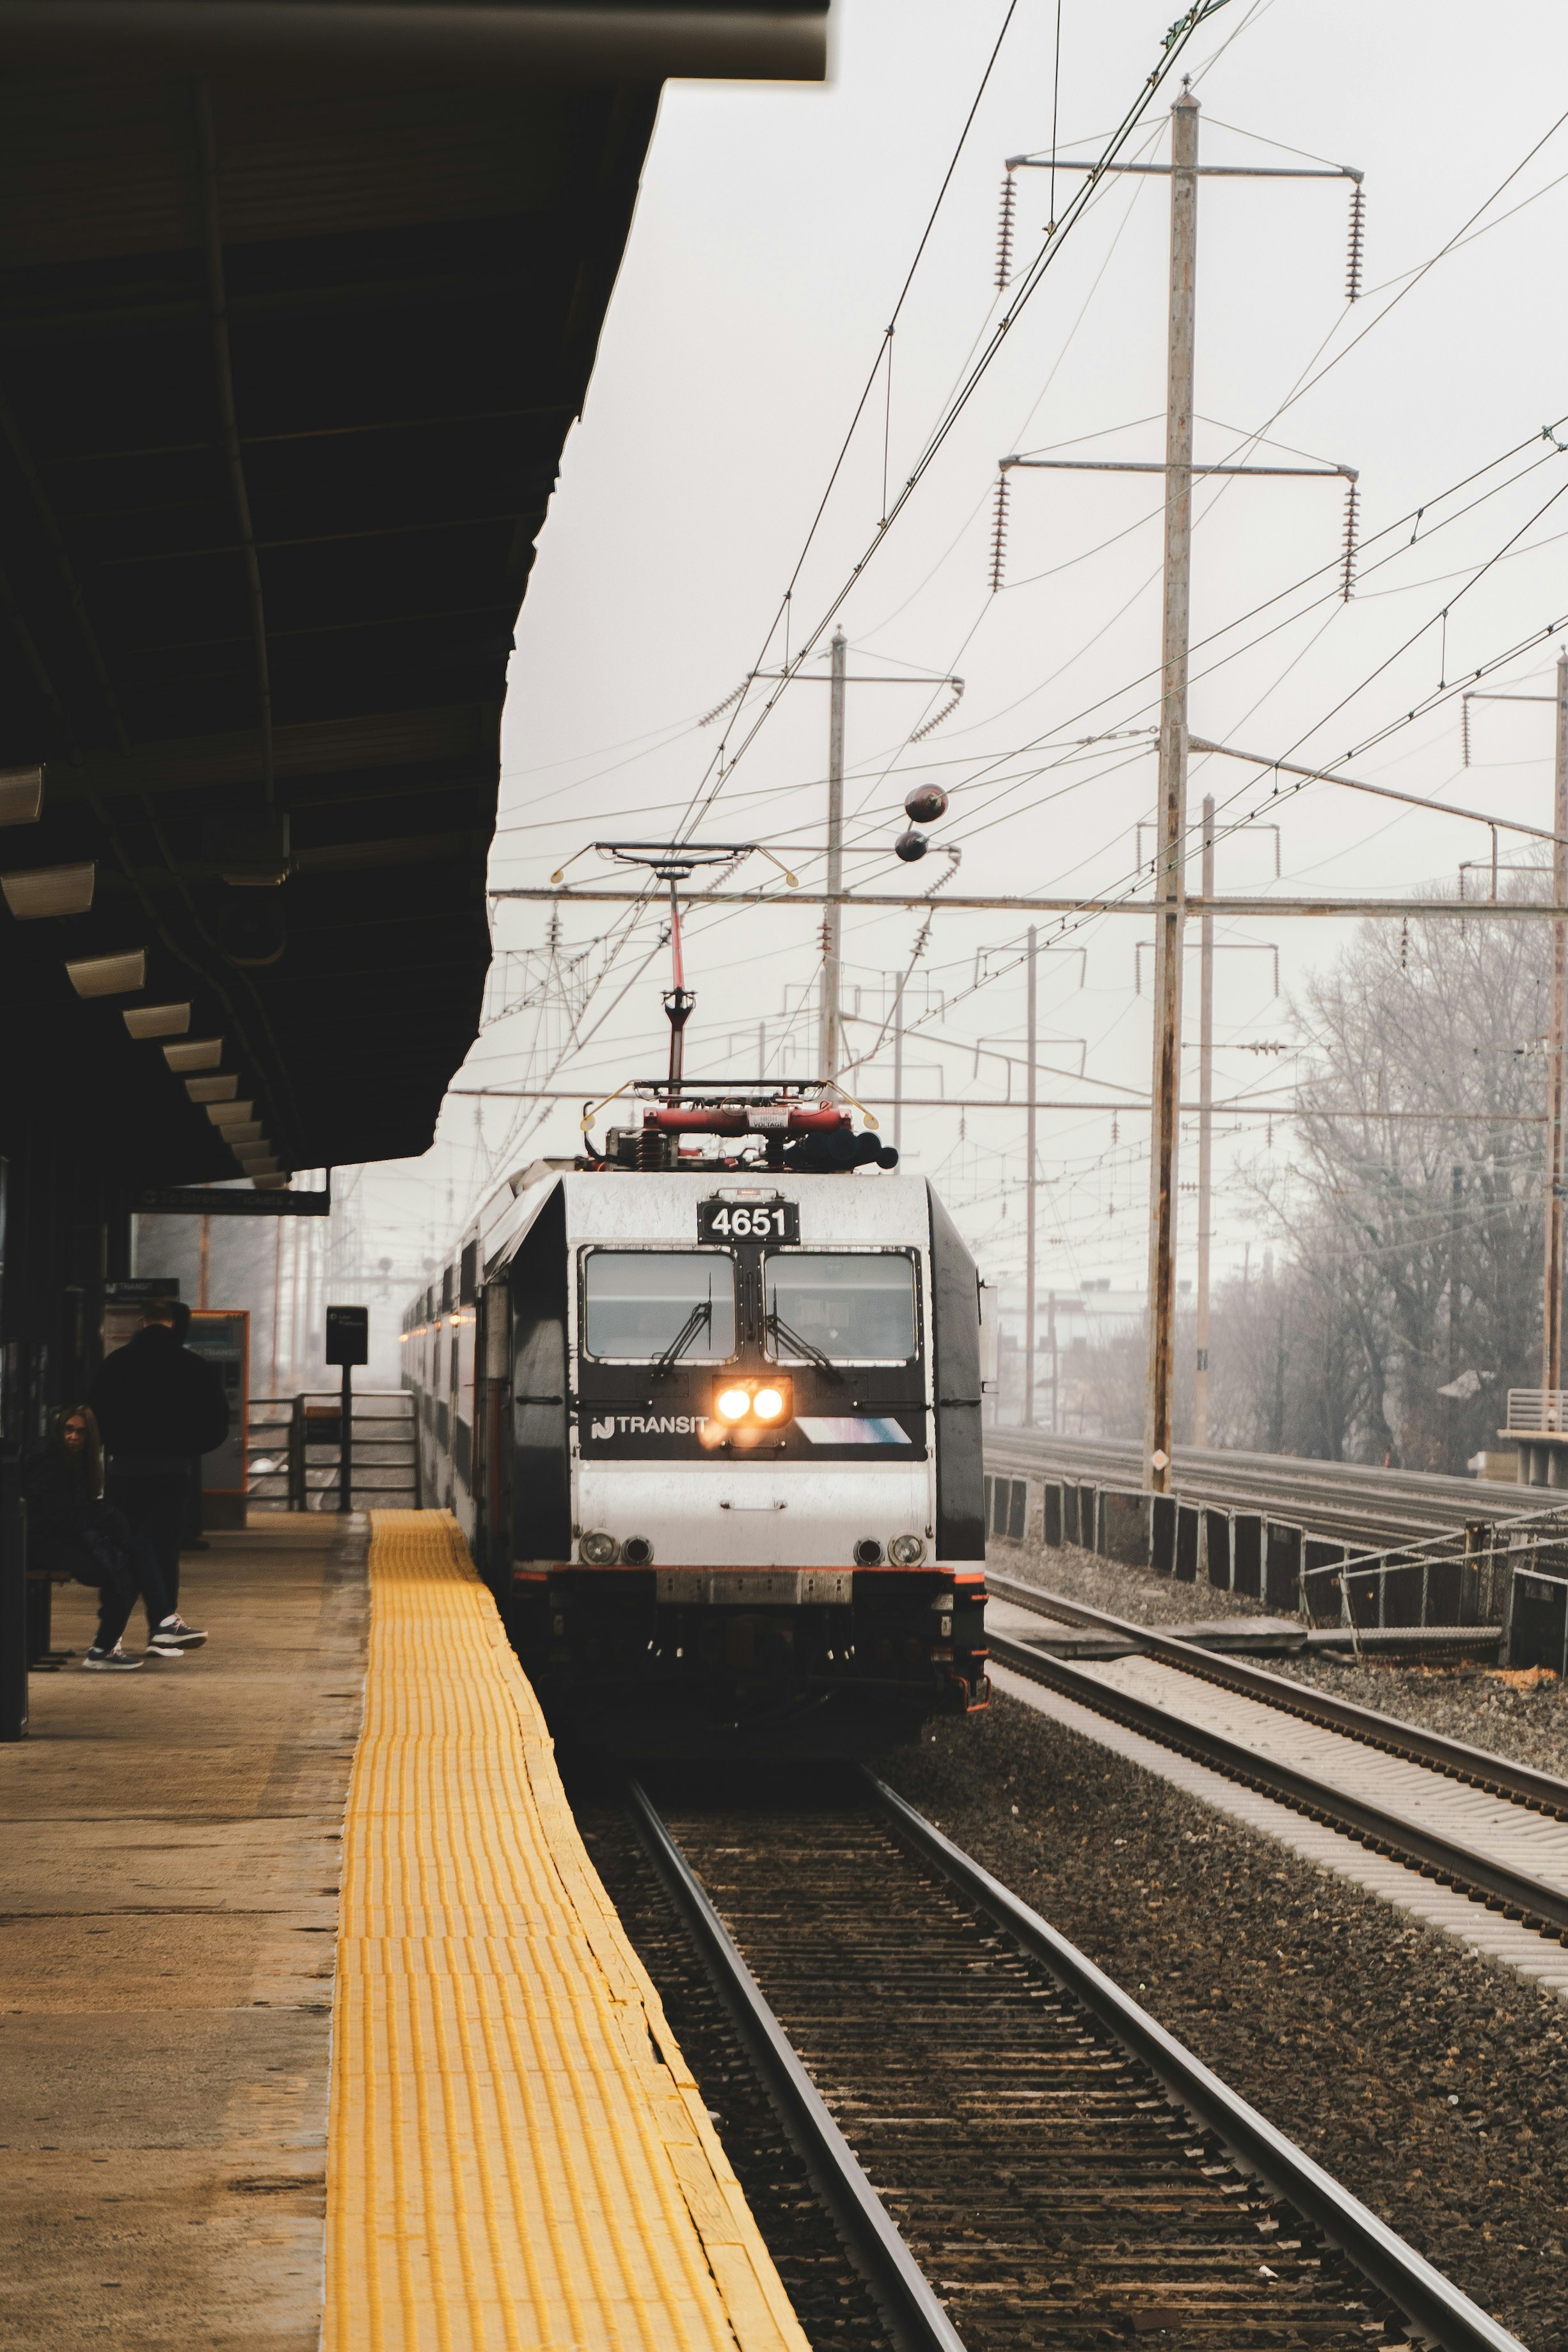 white and black train on rail tracks during daytime